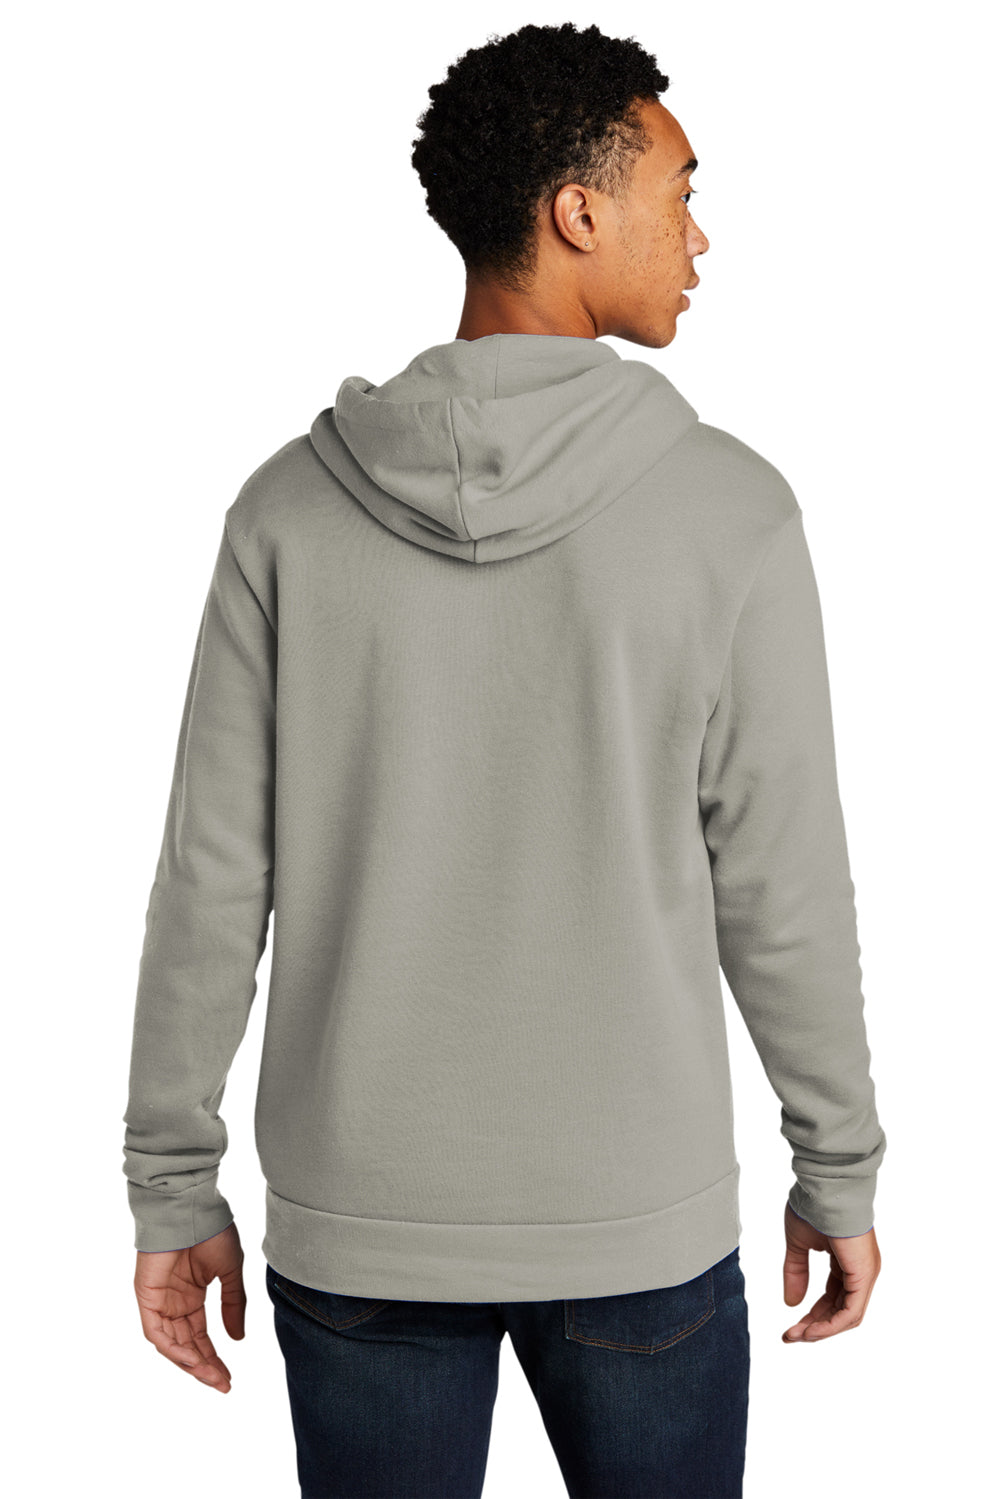 Next Level NL9303/9303 Mens Fleece Hooded Sweatshirt Hoodie Lead Grey/Light Grey Back